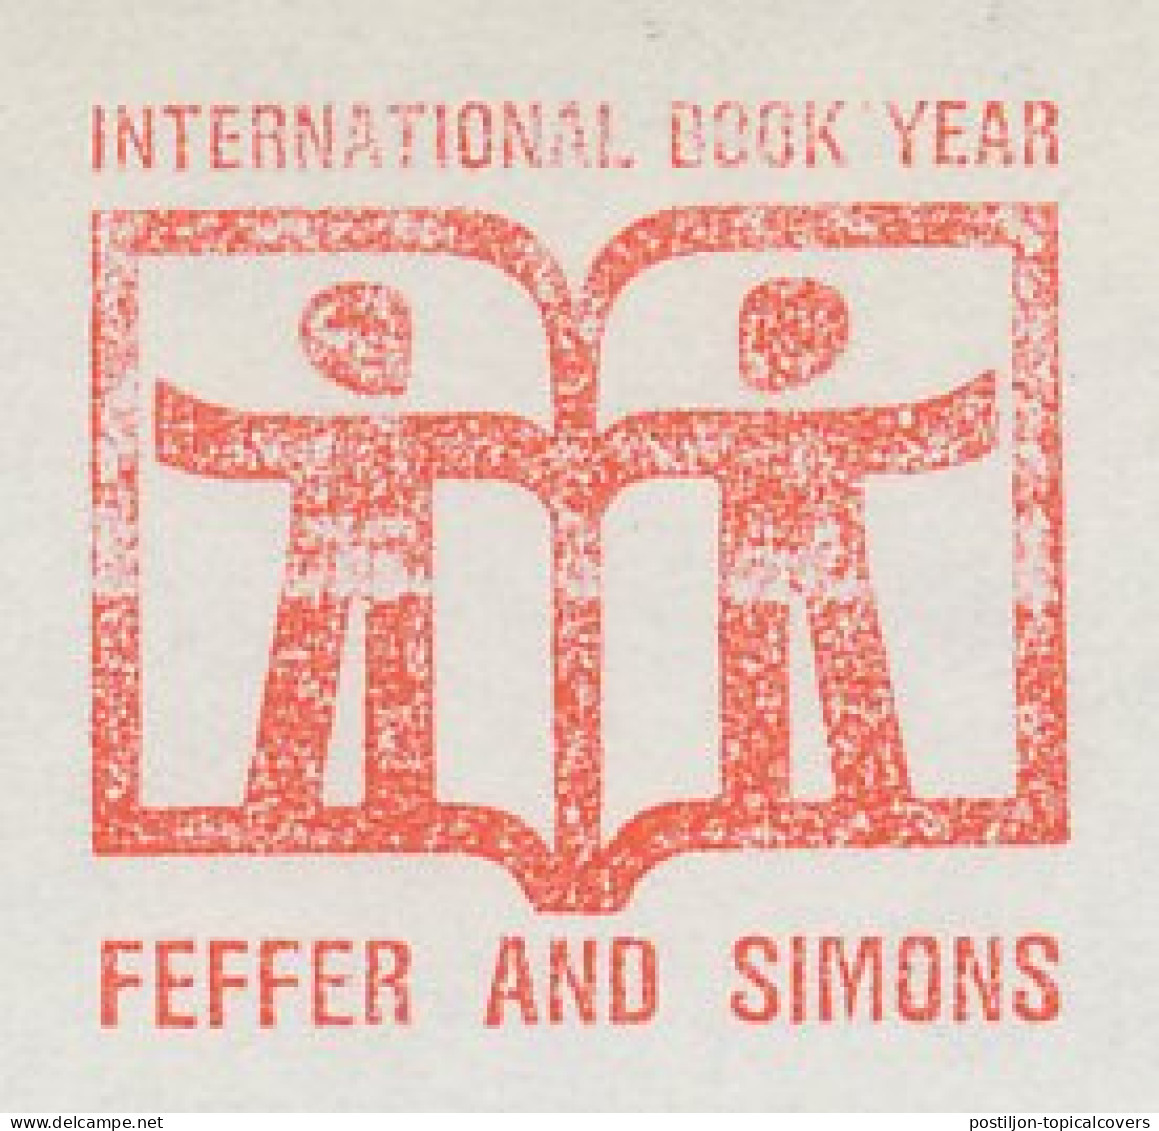 Meter Cut Netherlands 1972 International Book Year - United Nations - UNESCO - ONU